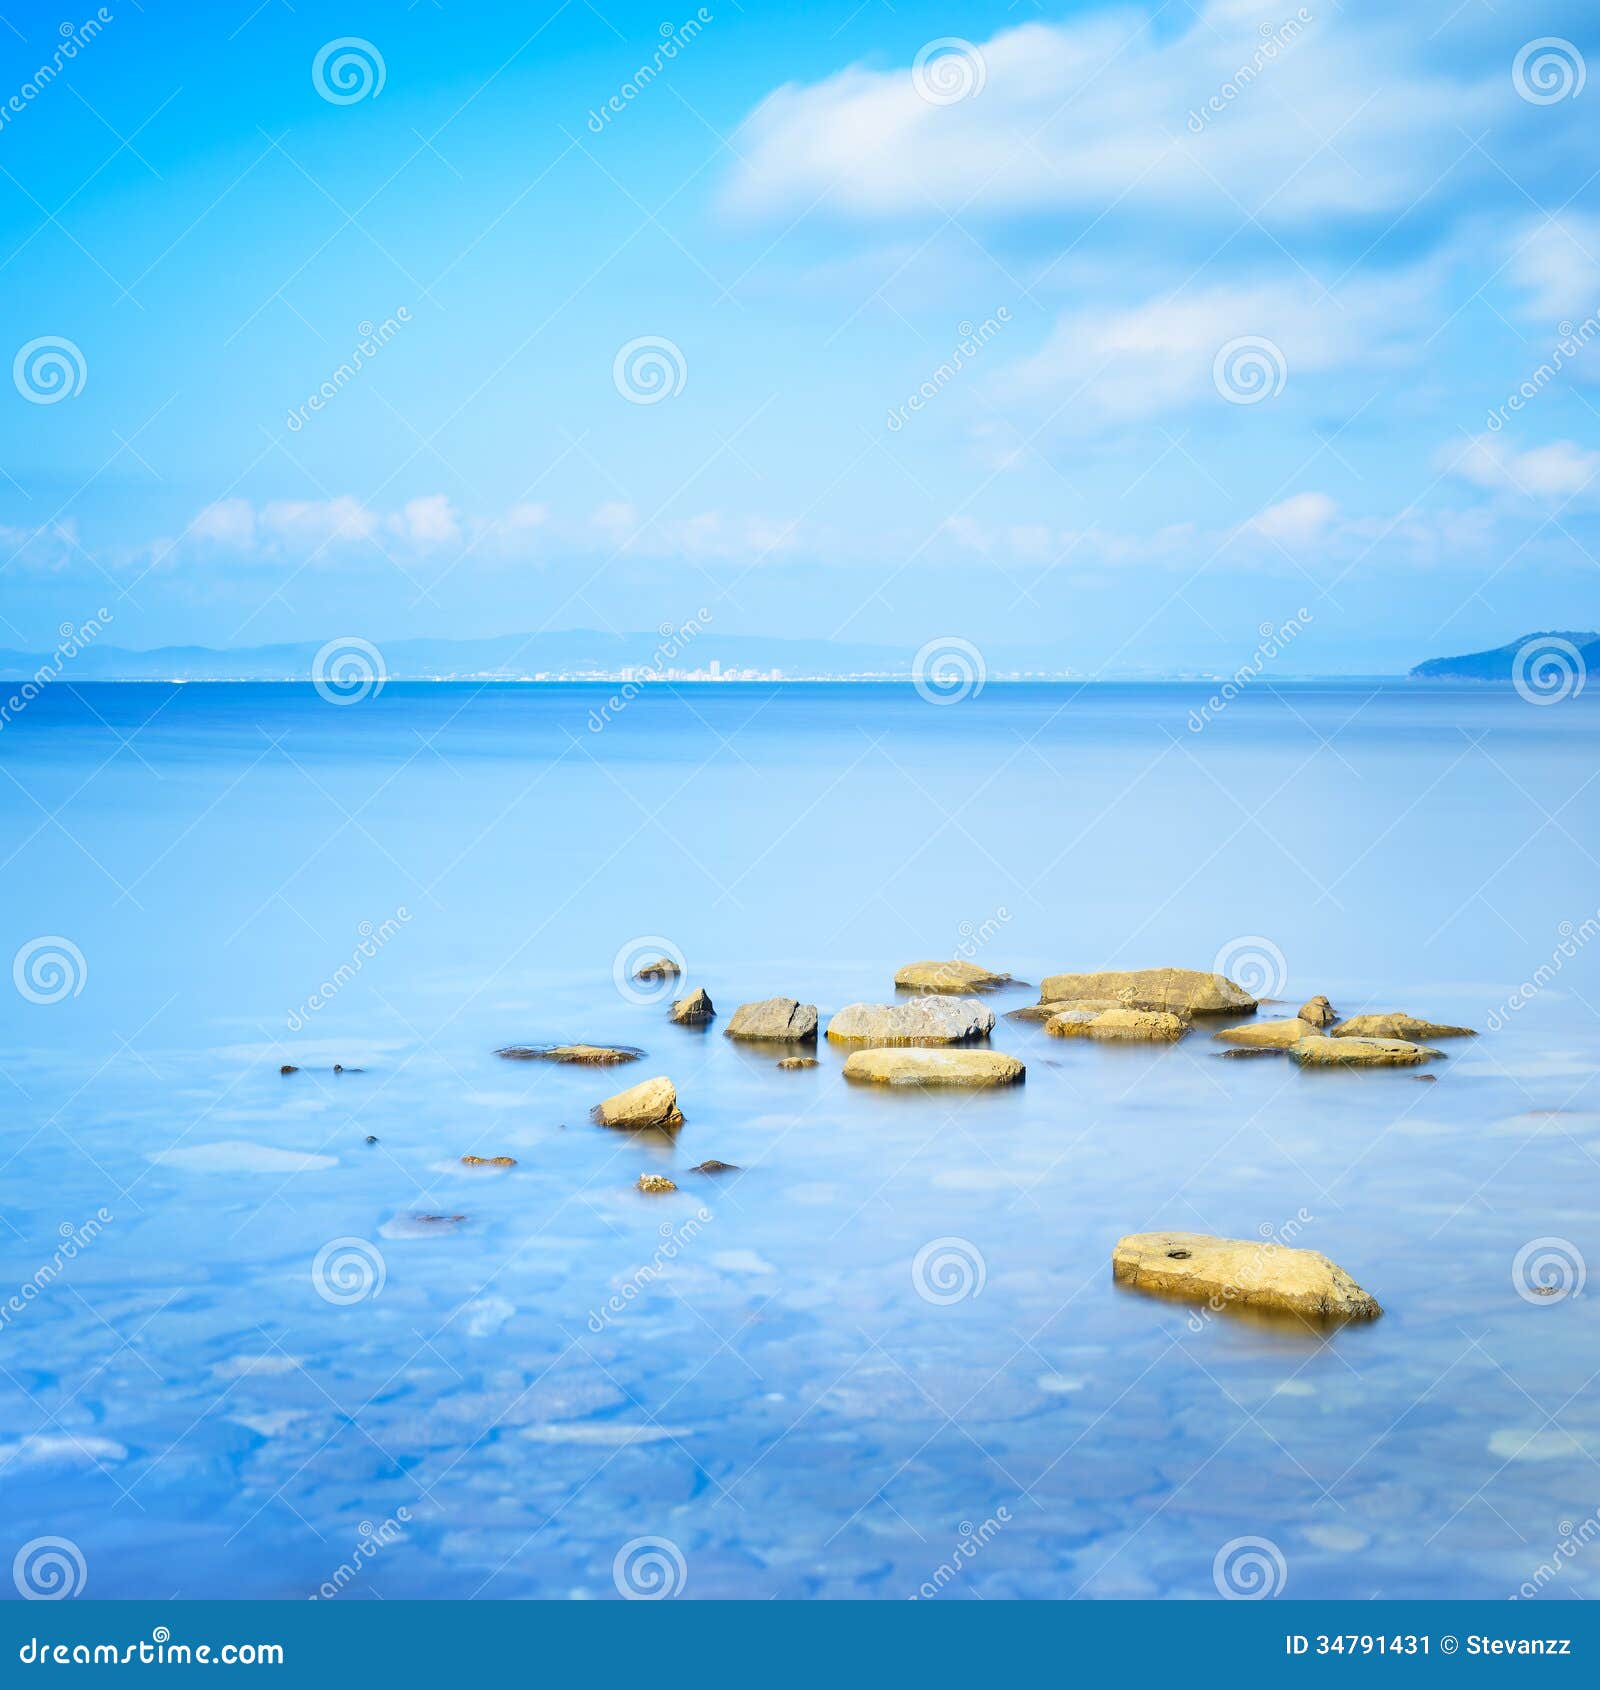 Felsen in einem blauen Ozean in einem Meer bellen. Punta-Ala, Toskana, Italien. Felsen in einem blauen Ozean in einem Meer bellen. Lange Belichtungsphotographie. Punta-Ala, Toskana, Italien